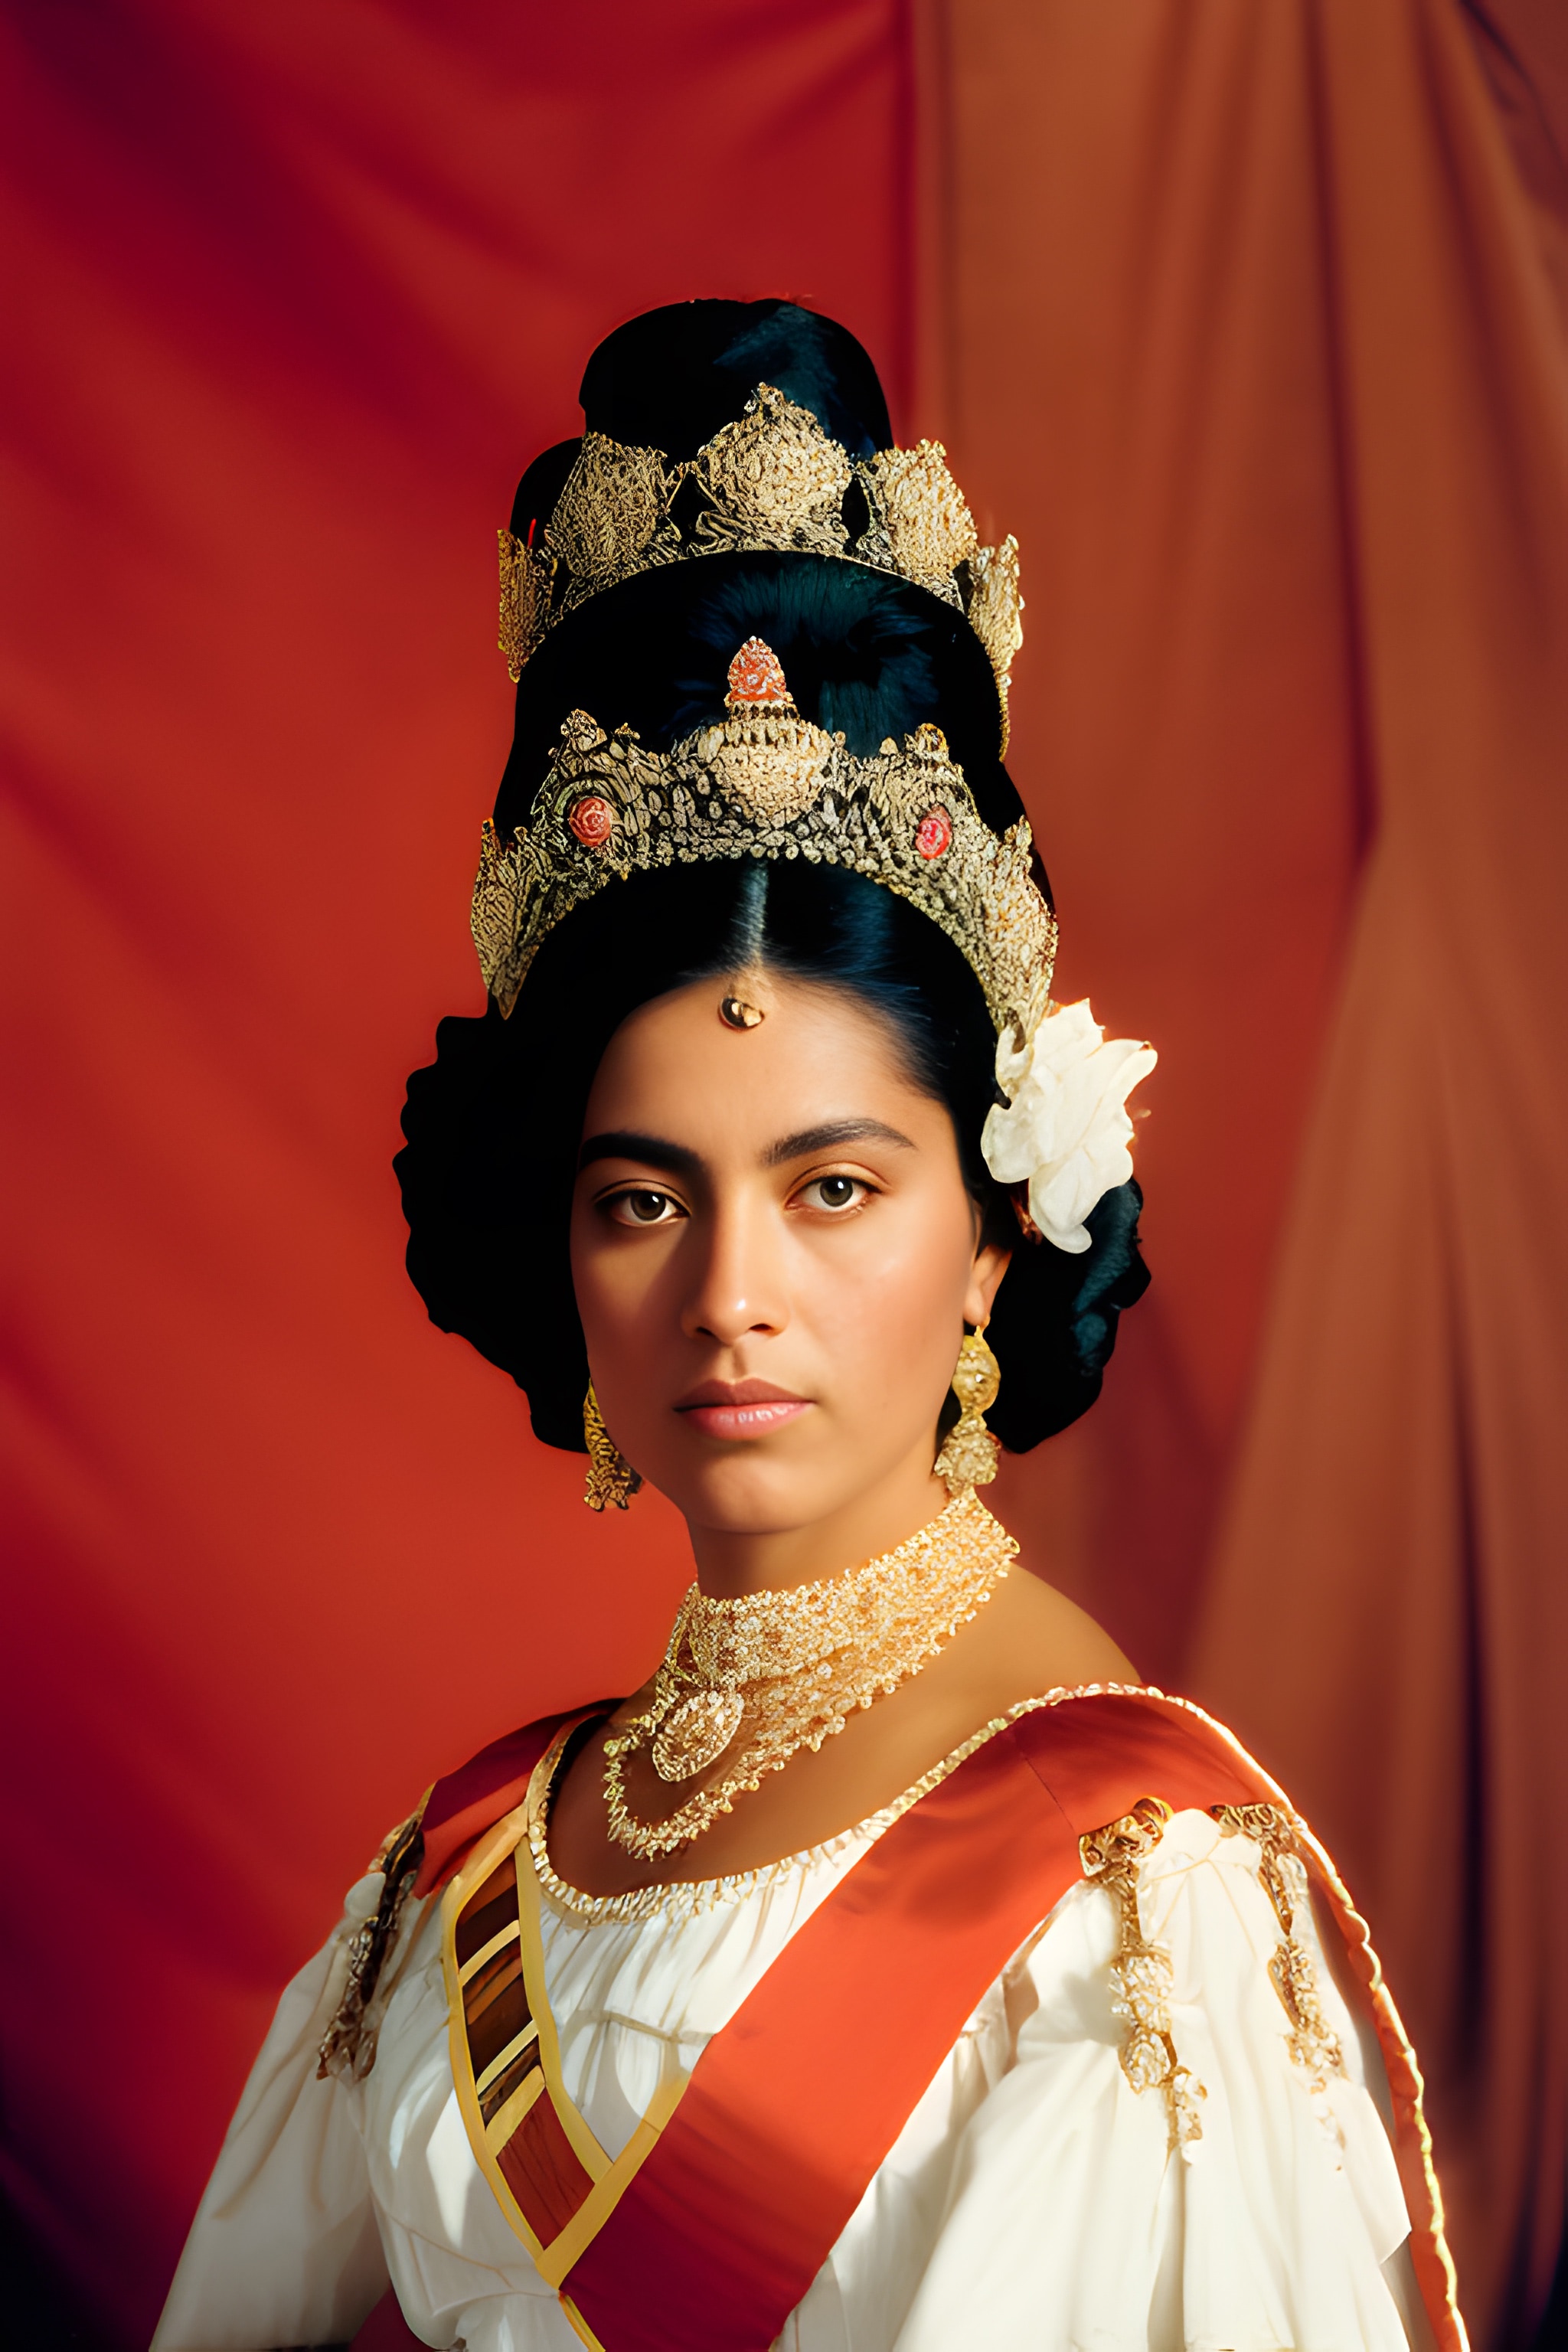 high-detail-portrait-of-a-Mexican-queen-j2jw